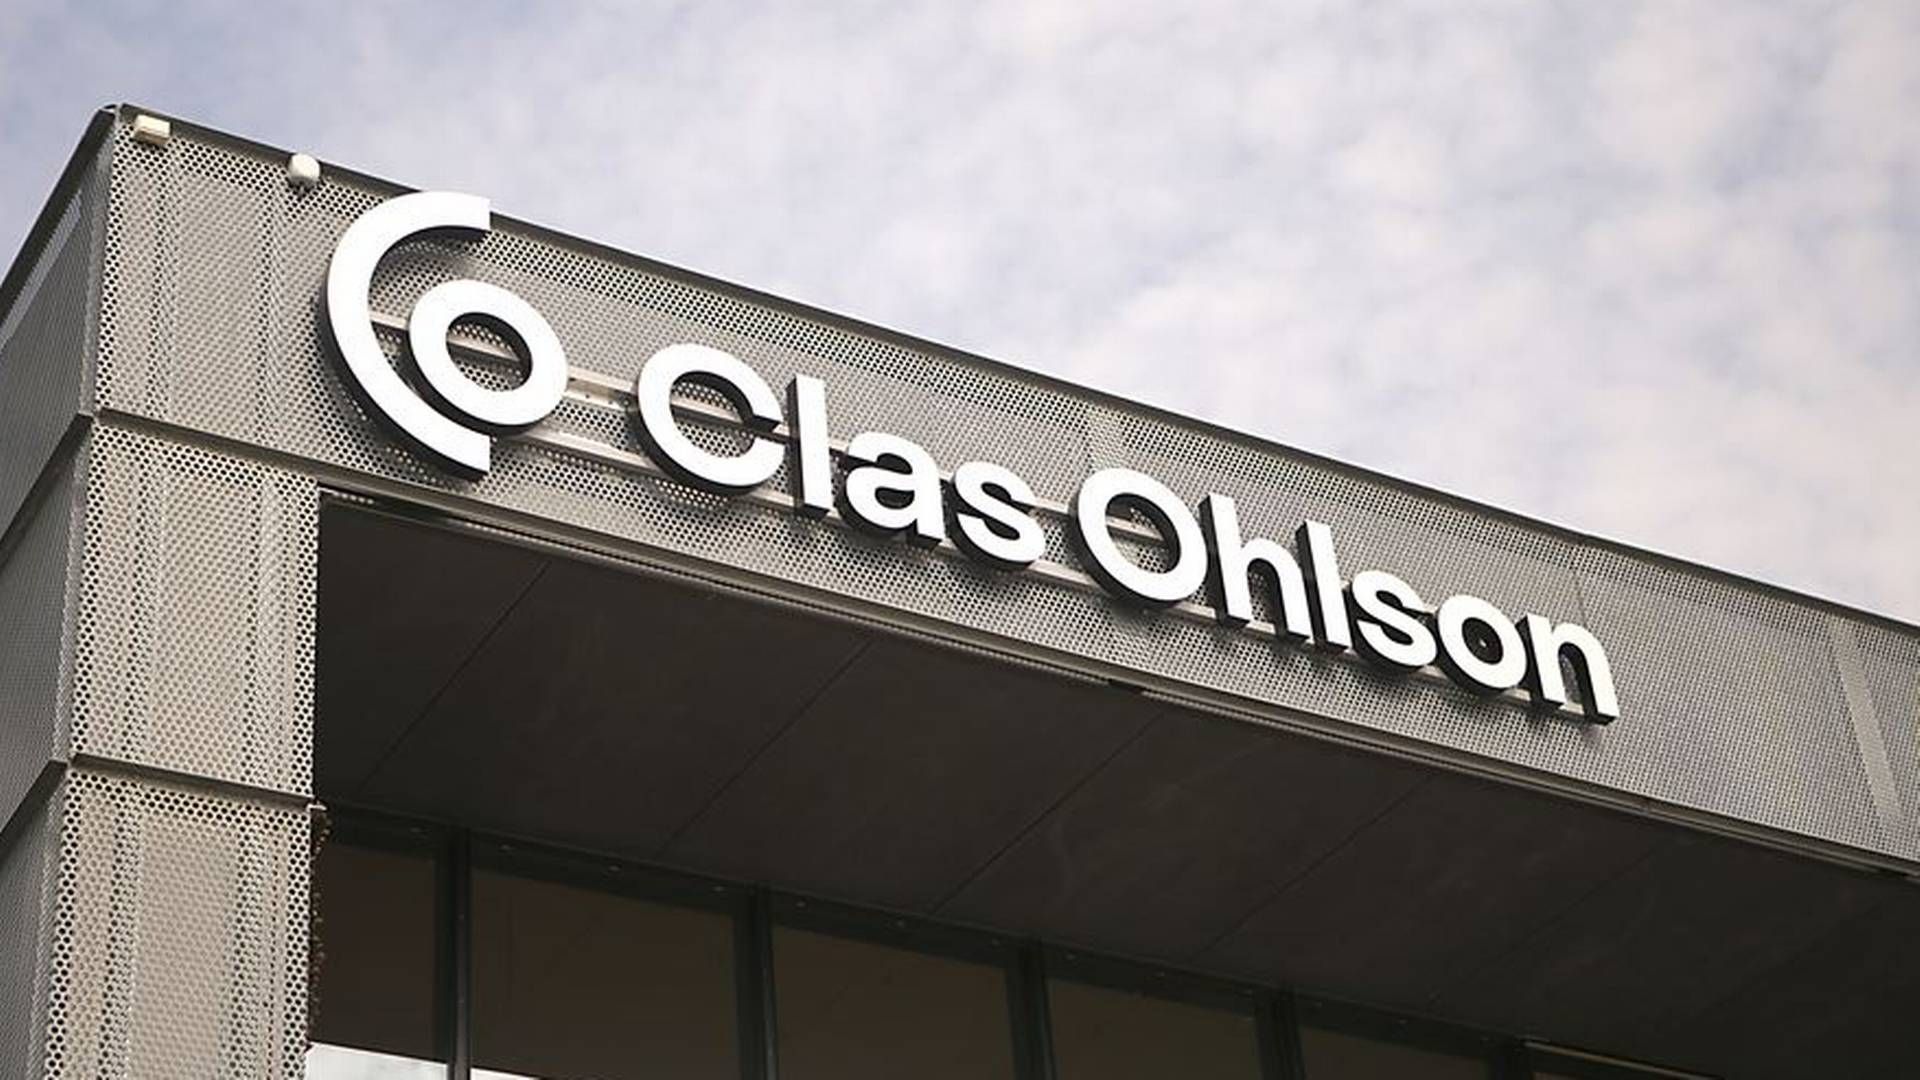 NY BUTIKK: Clas Ohlson åpner ny butikk i Drammen. | Foto: Clas Ohlson